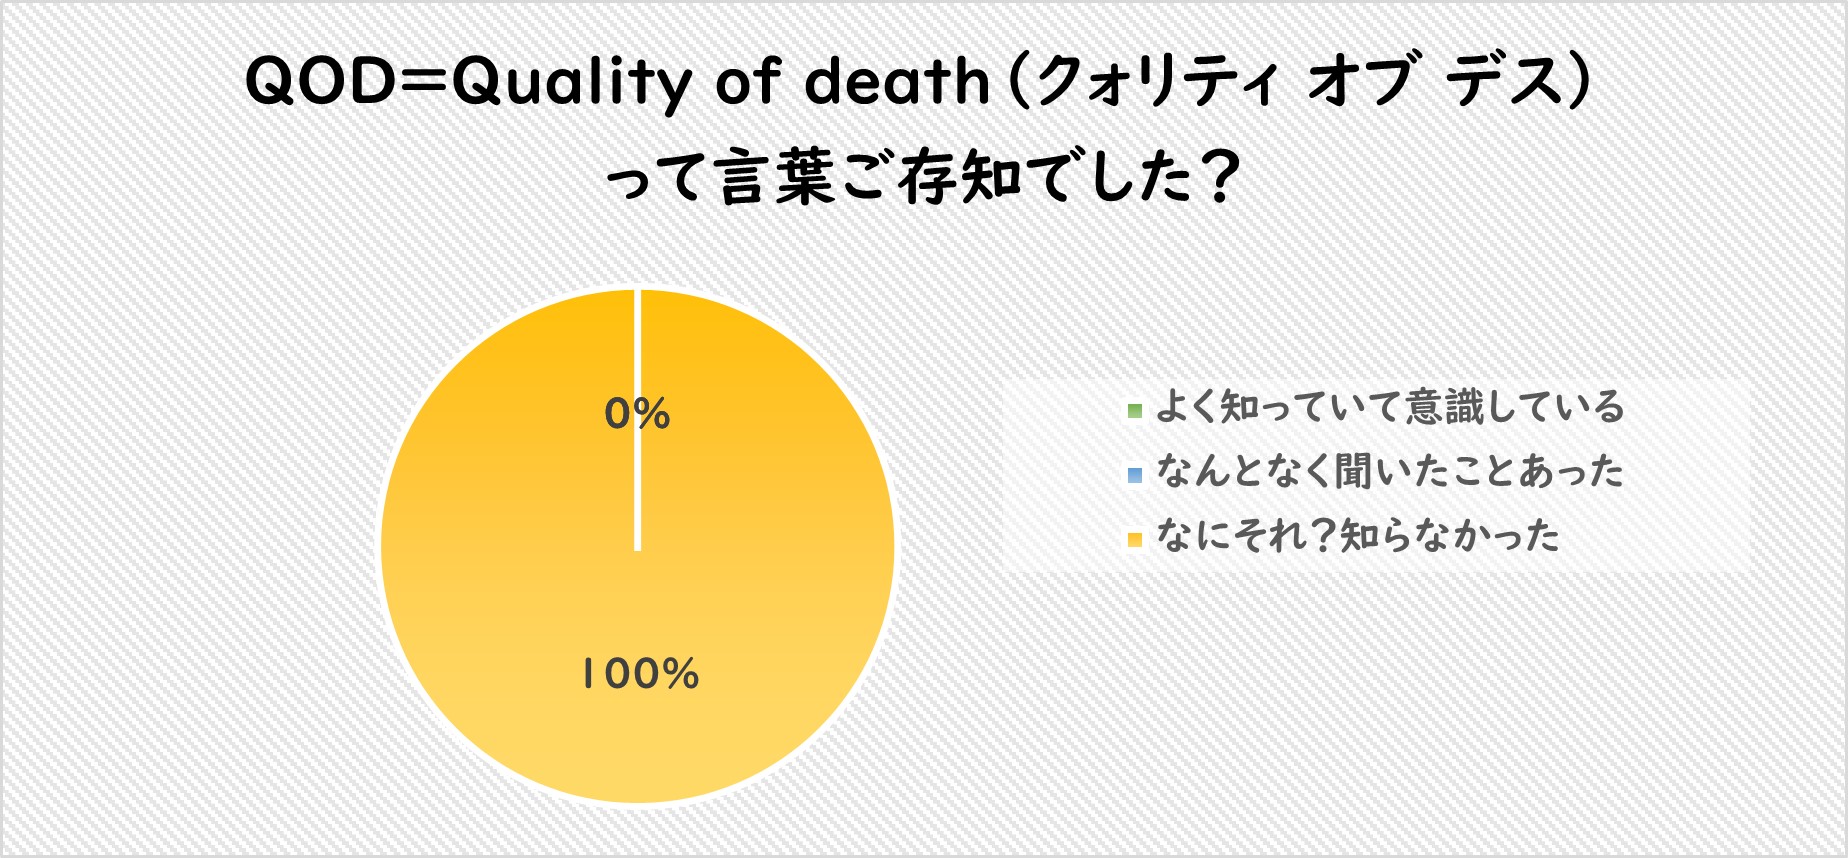 QOD＝Quality of death（クォリティ オブ デス）は「理想的な死」って言葉ご存知でした？